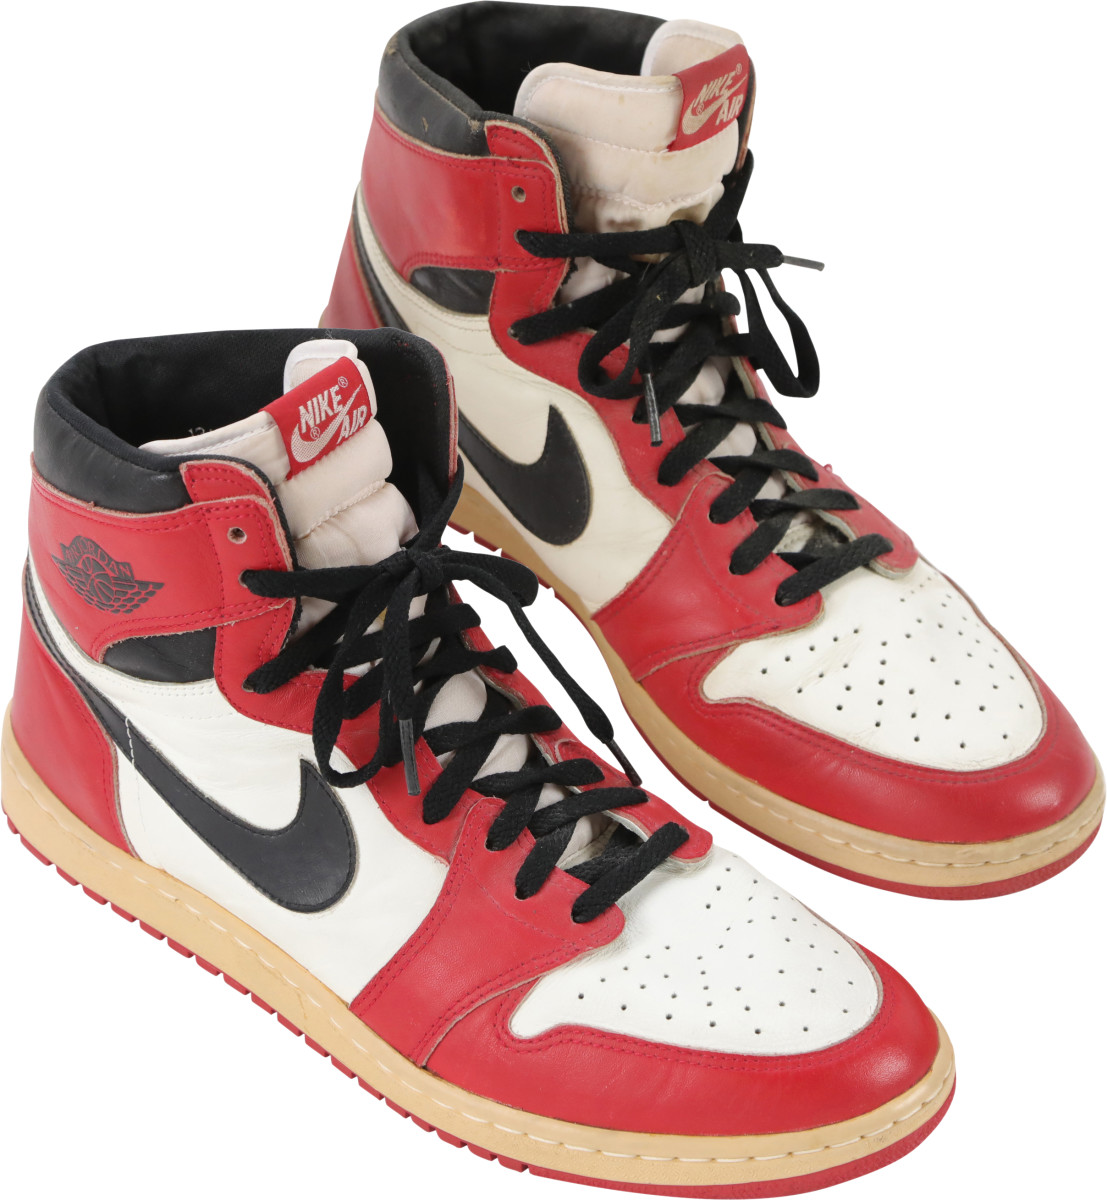 Michael Jordan sneakers worn during his 1984-85 or 1985-86 seasons.